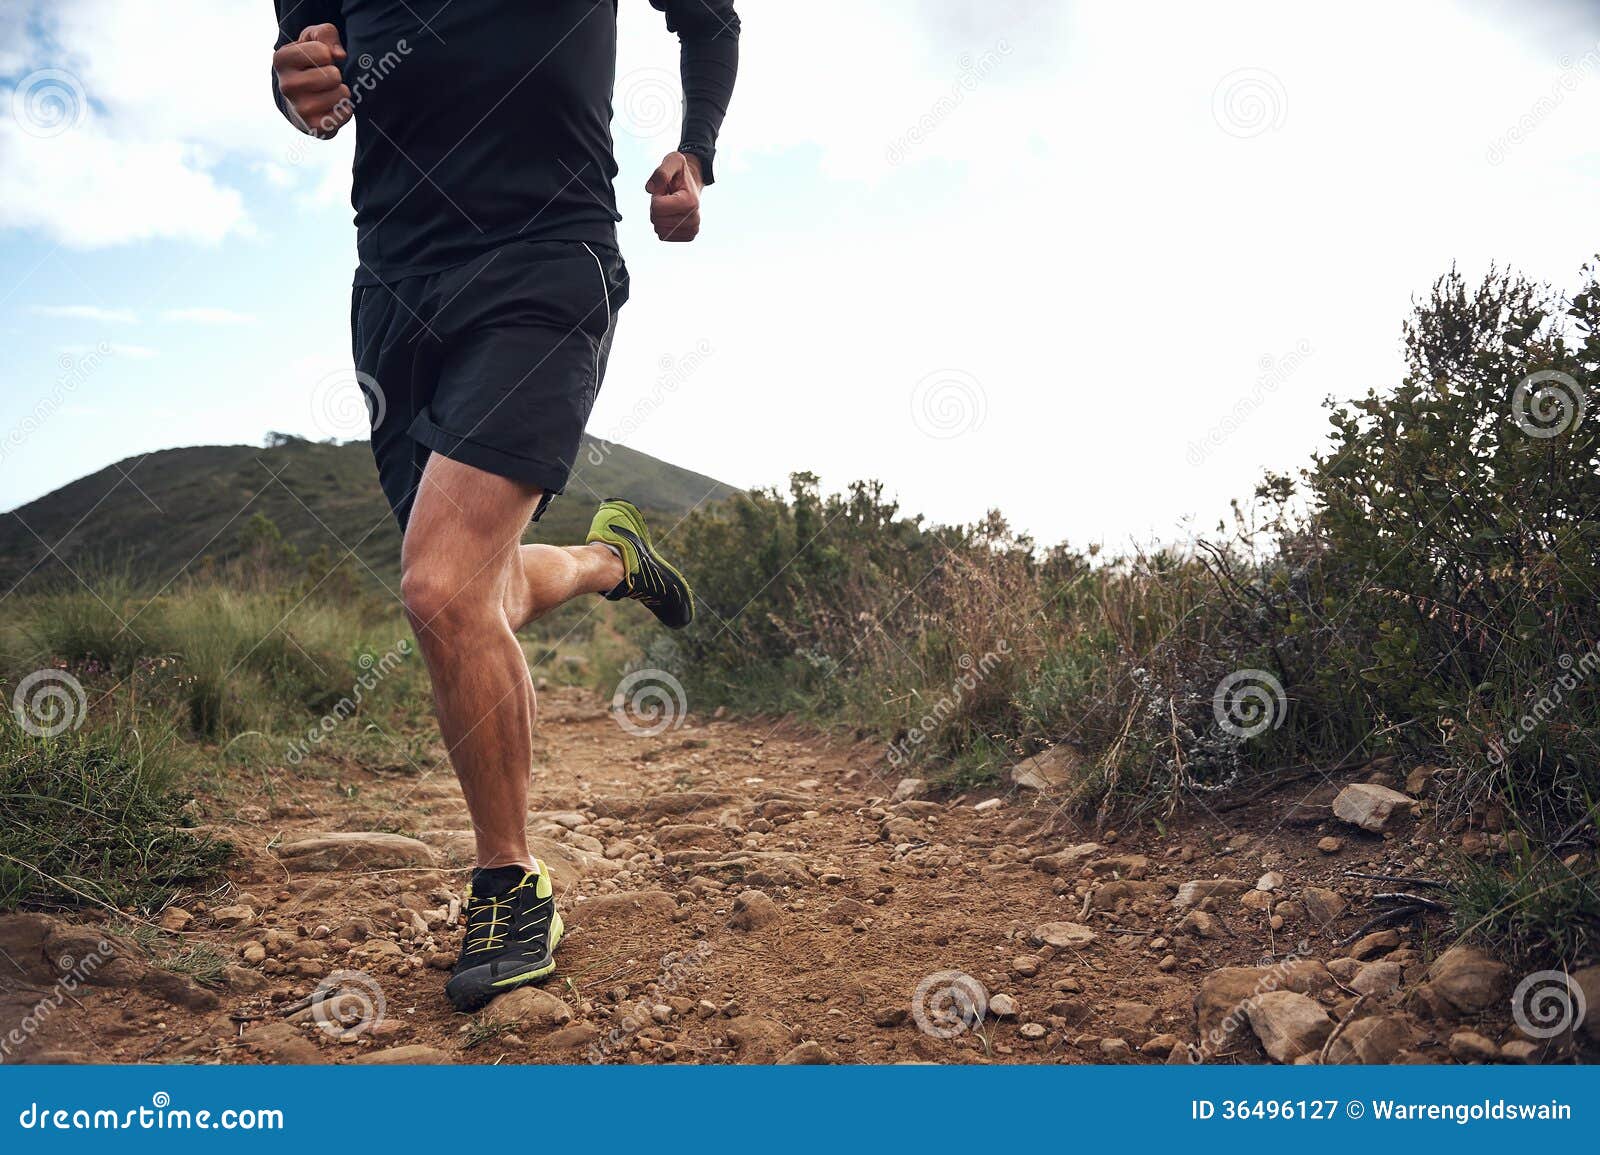 trail running fitness